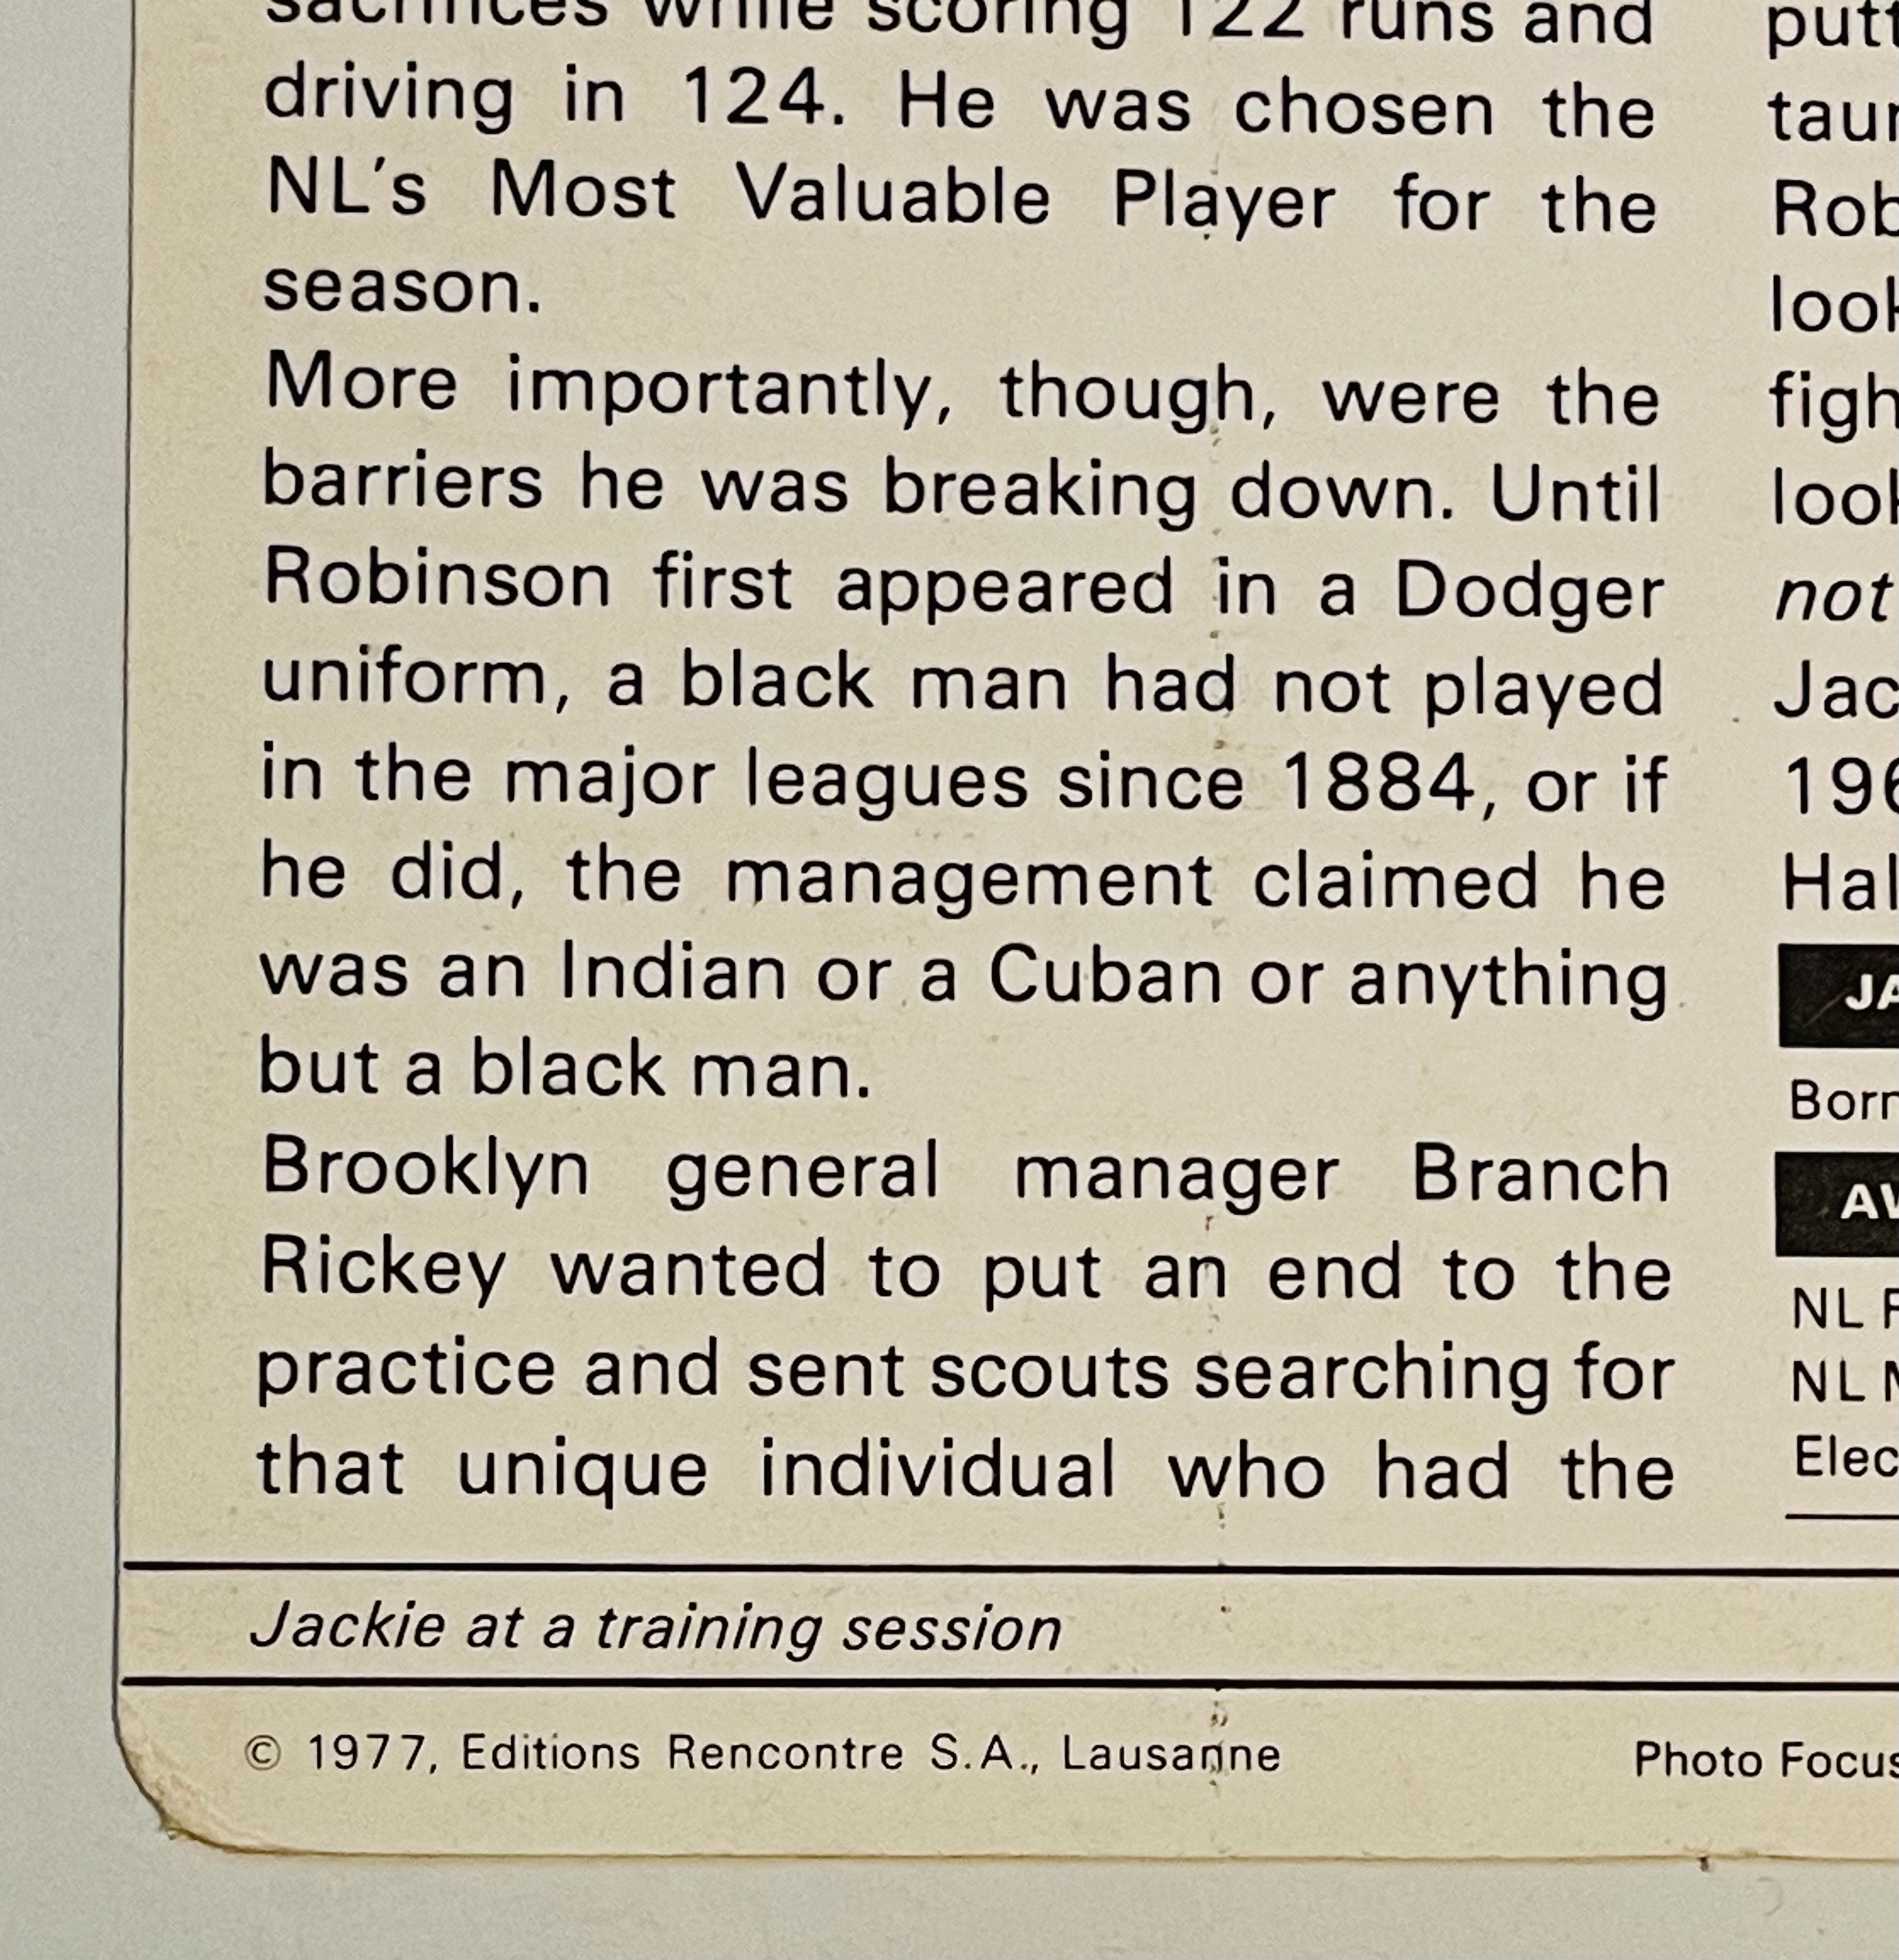 Jackie Robinson rare 5x7 baseball card printed in Italy 1977